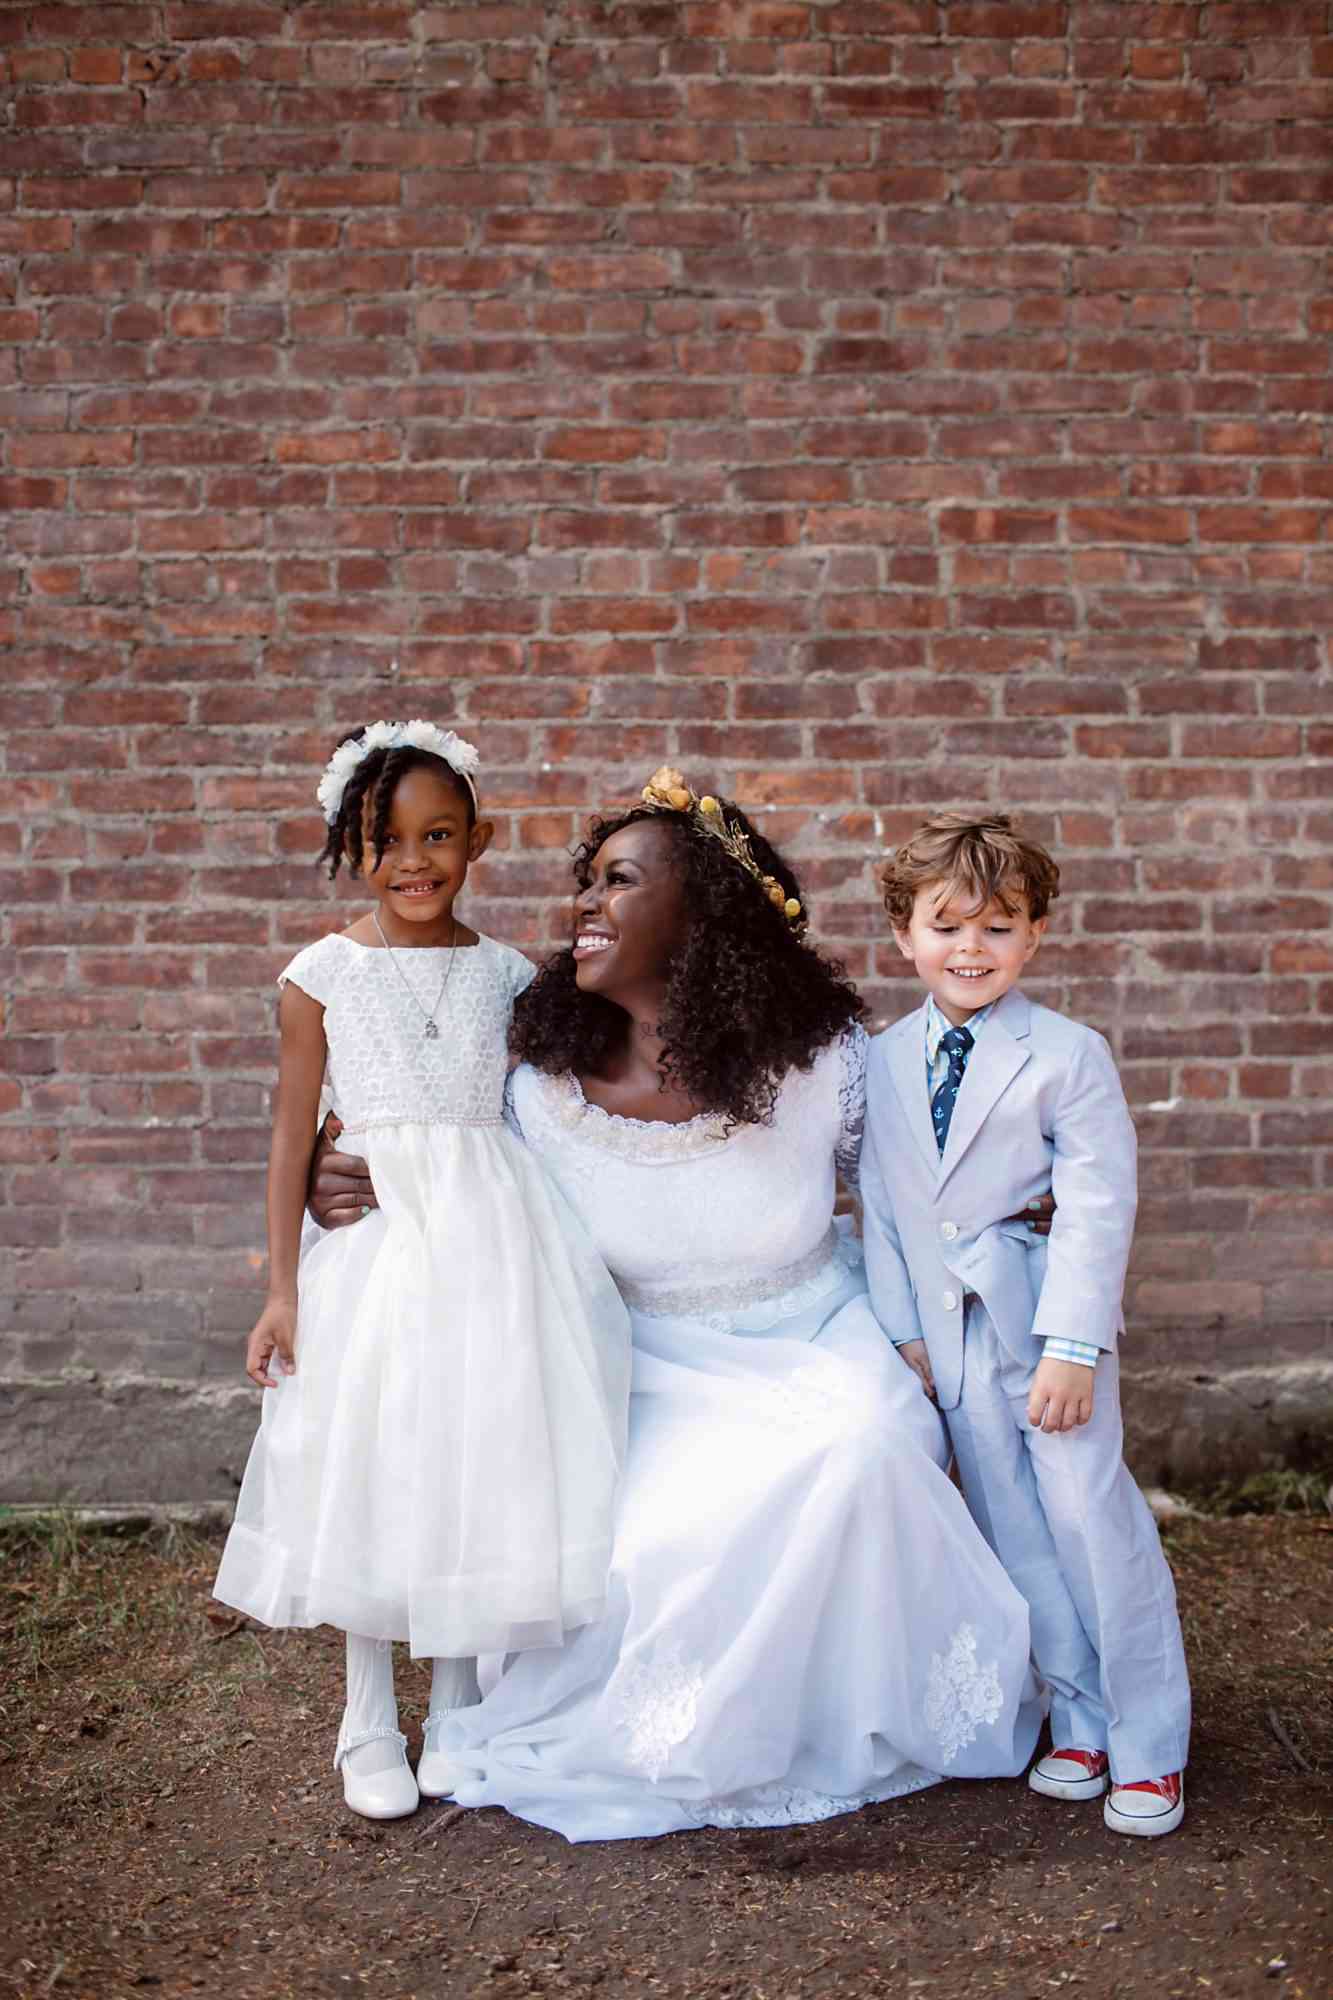 Vasthy mason婚礼新娘带着孩子